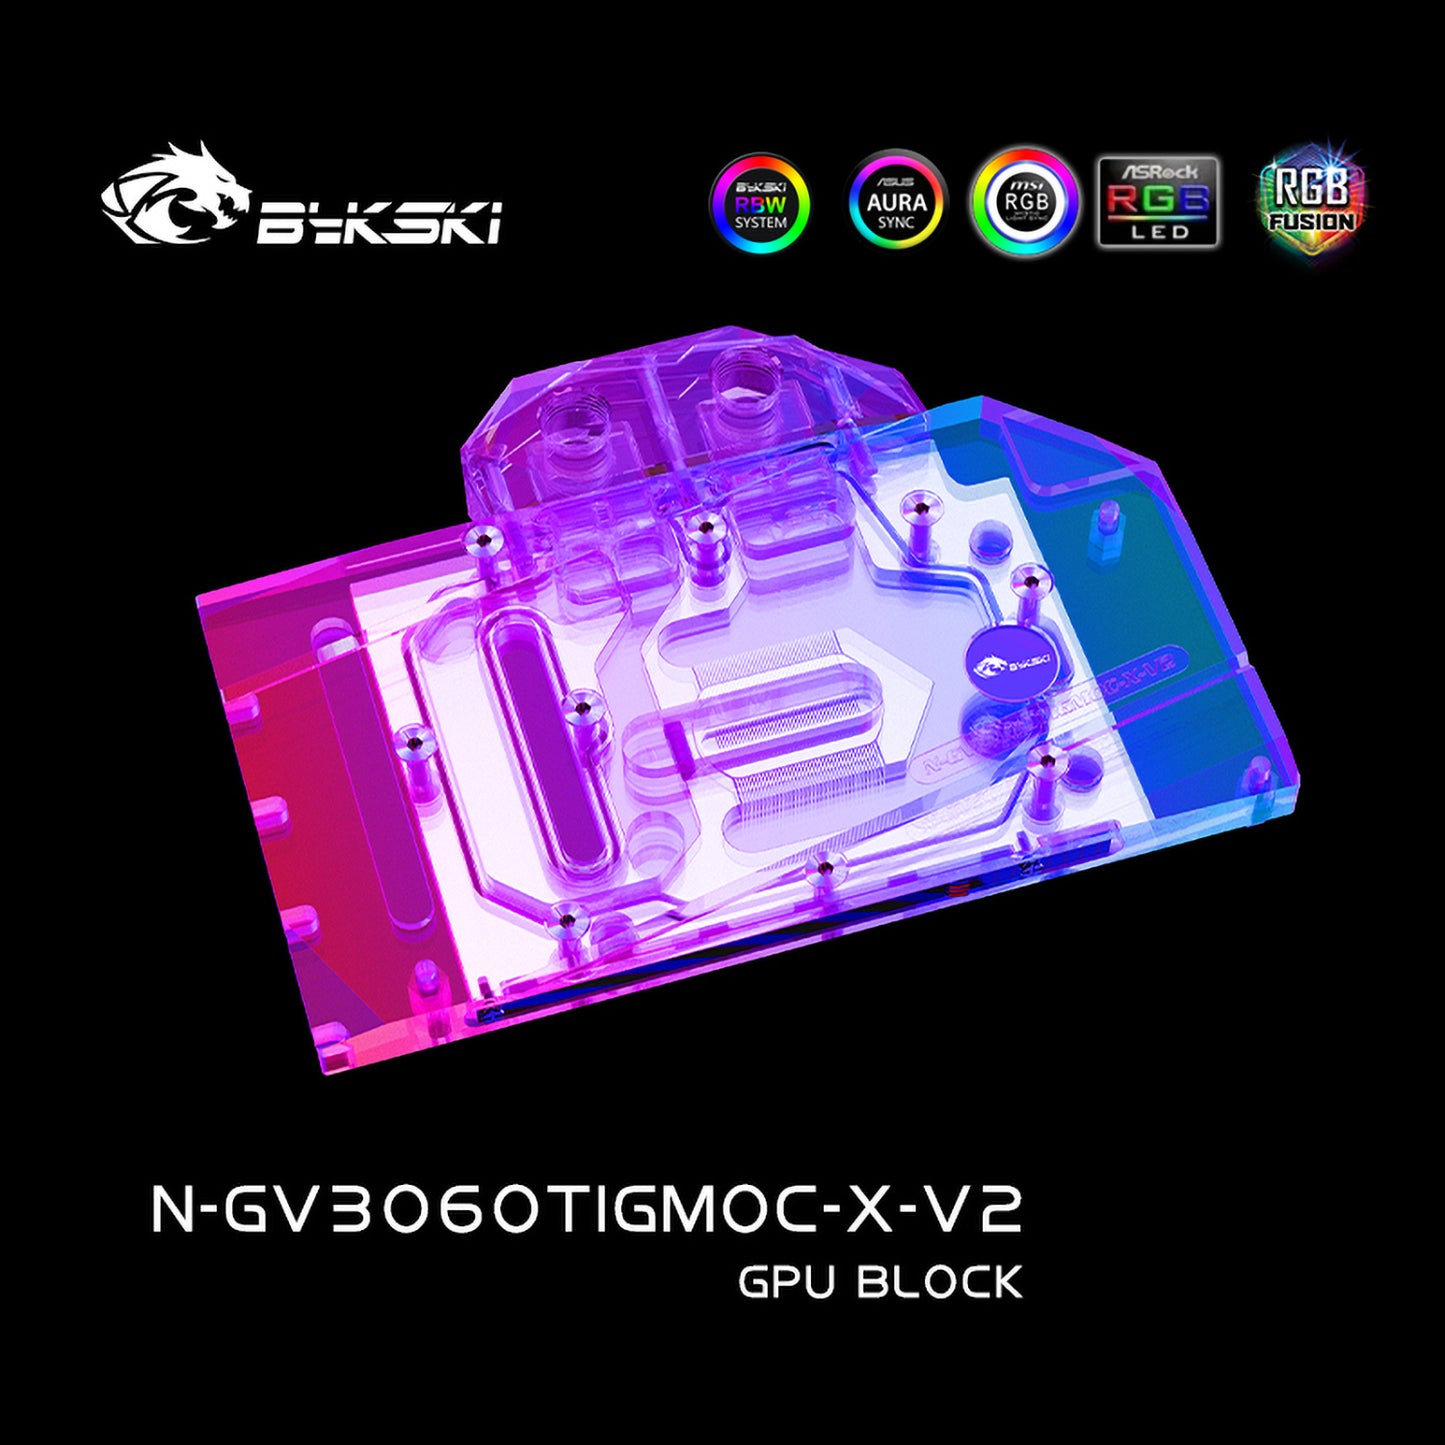 Bykski GPU Water Cooling Block For Gigabyte RTX 3060TI/3060/3050 Gaming / Eagle / Vision, GPU Cooler Liquid Cooling, N-GV3060TIGMOC-X-V2